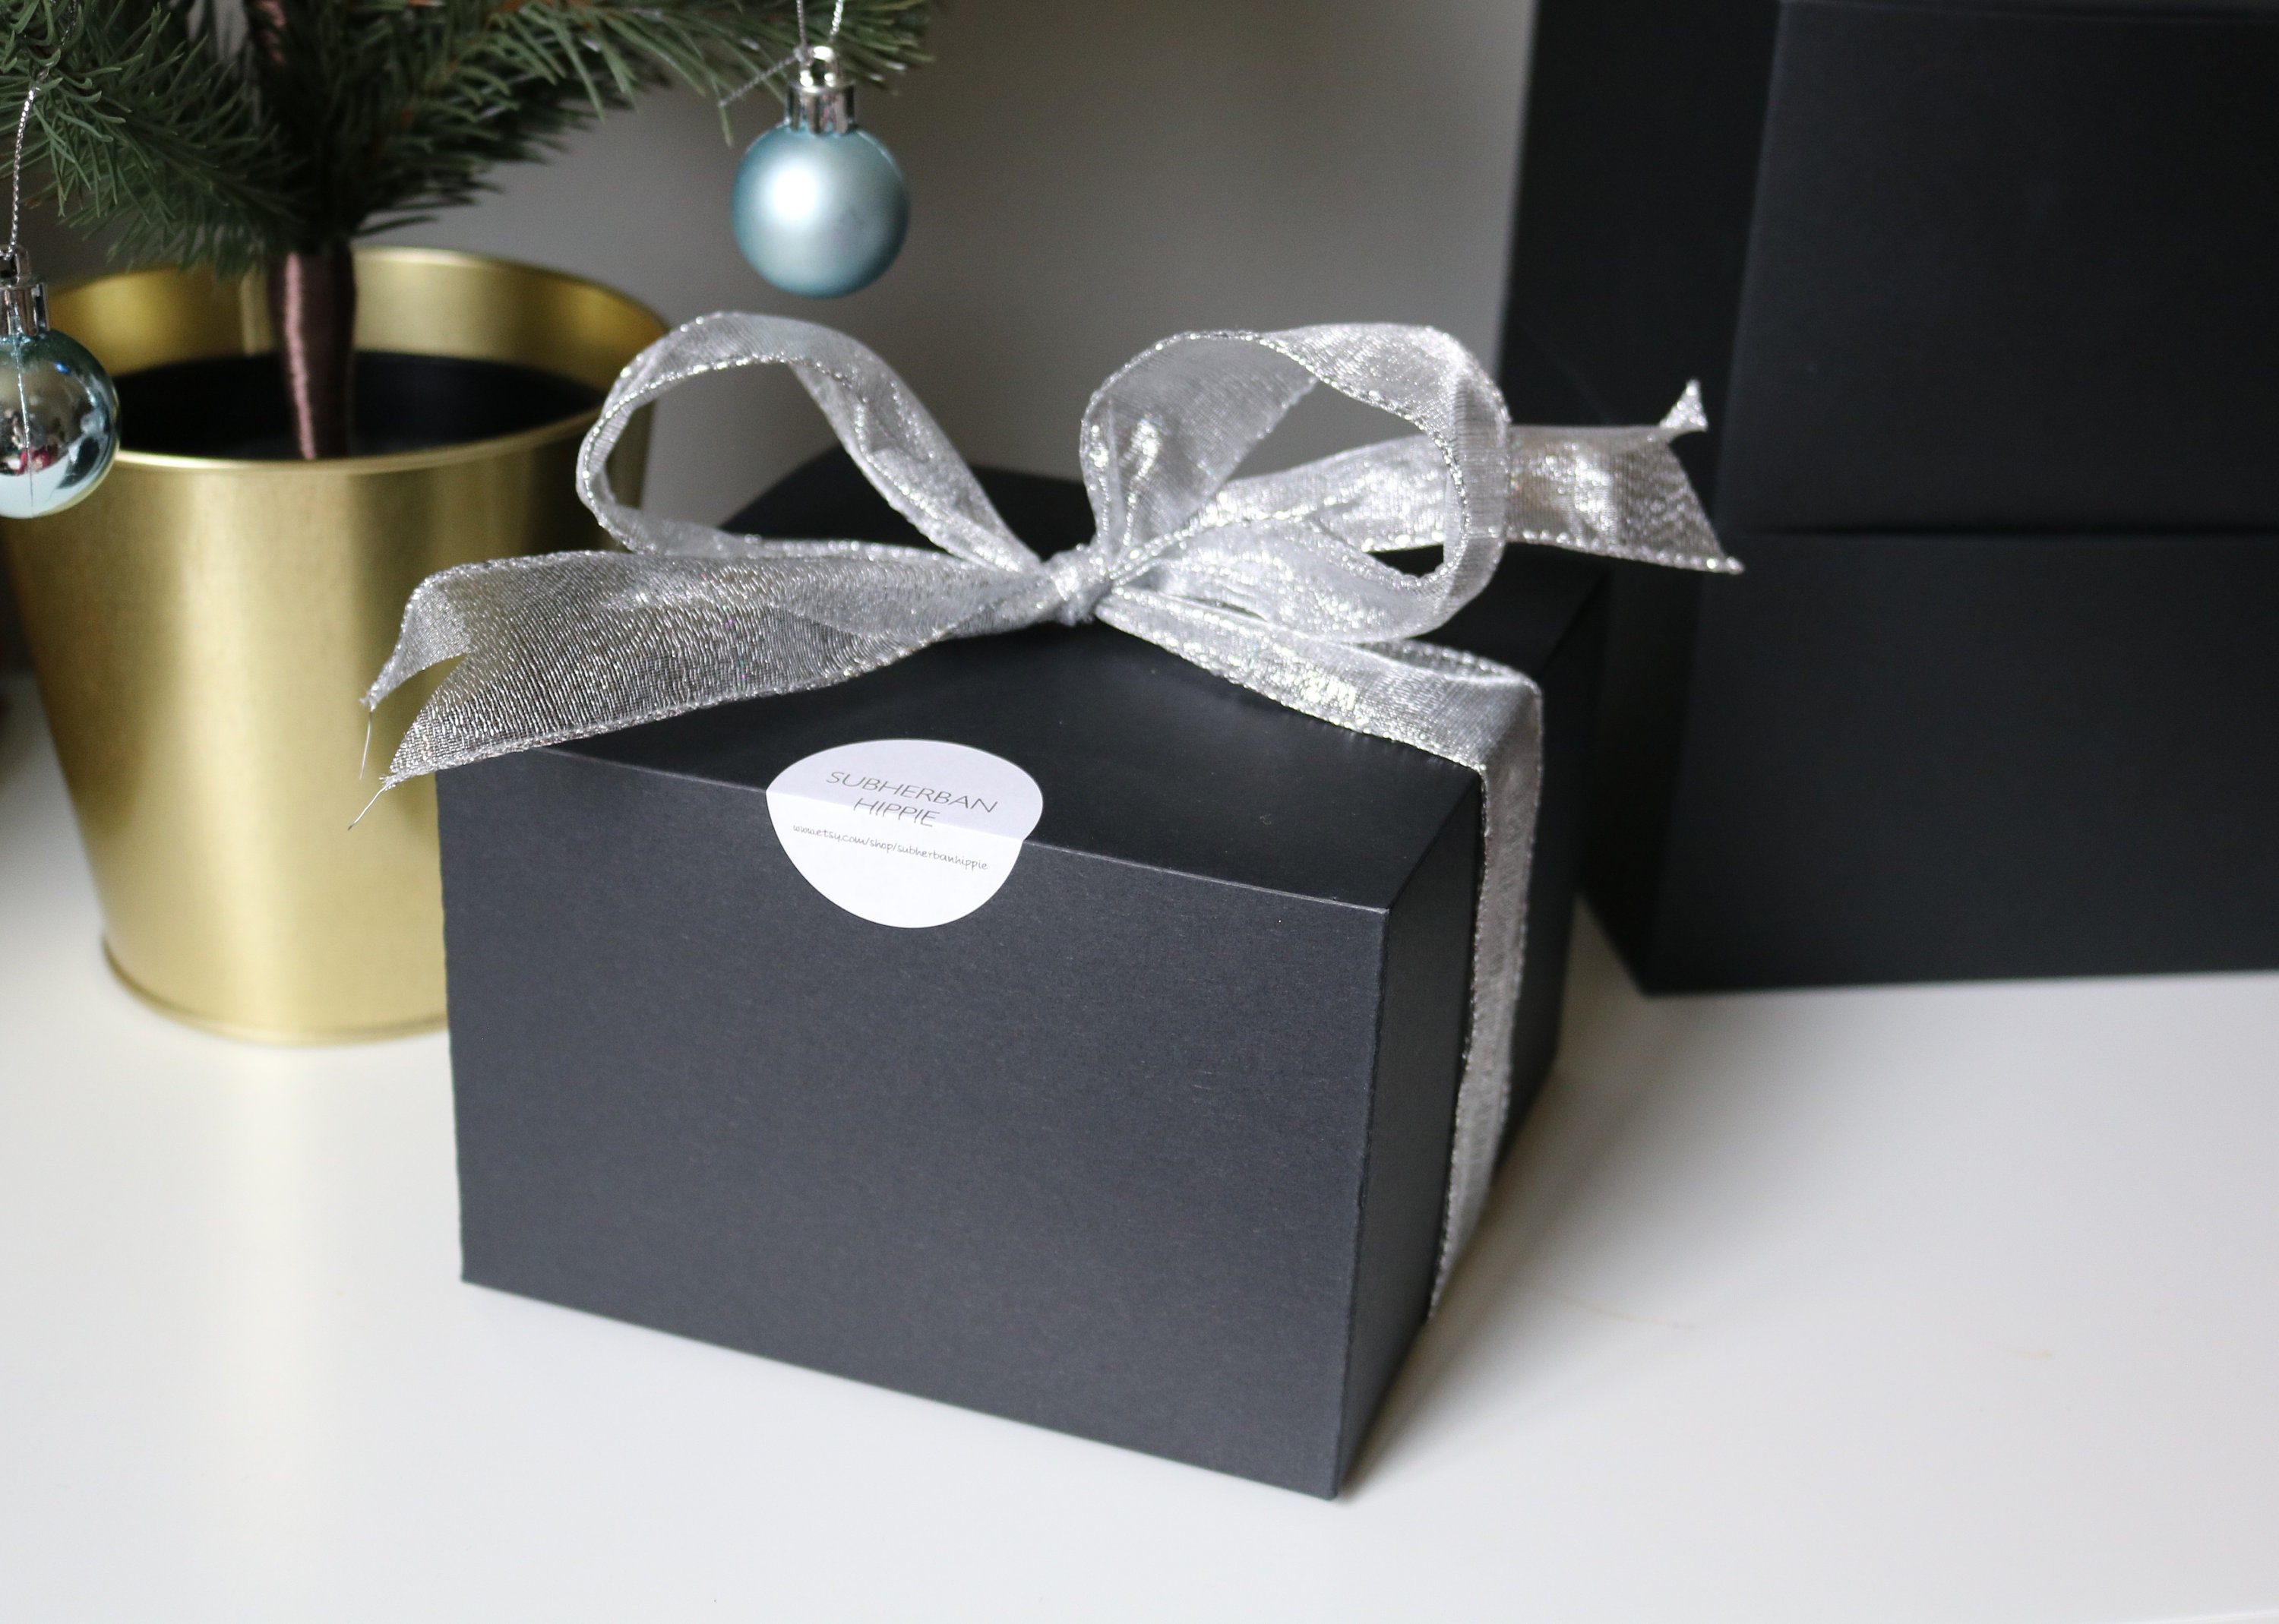 Minimalist Gift Sets & Self Care Kits - Plaine Products